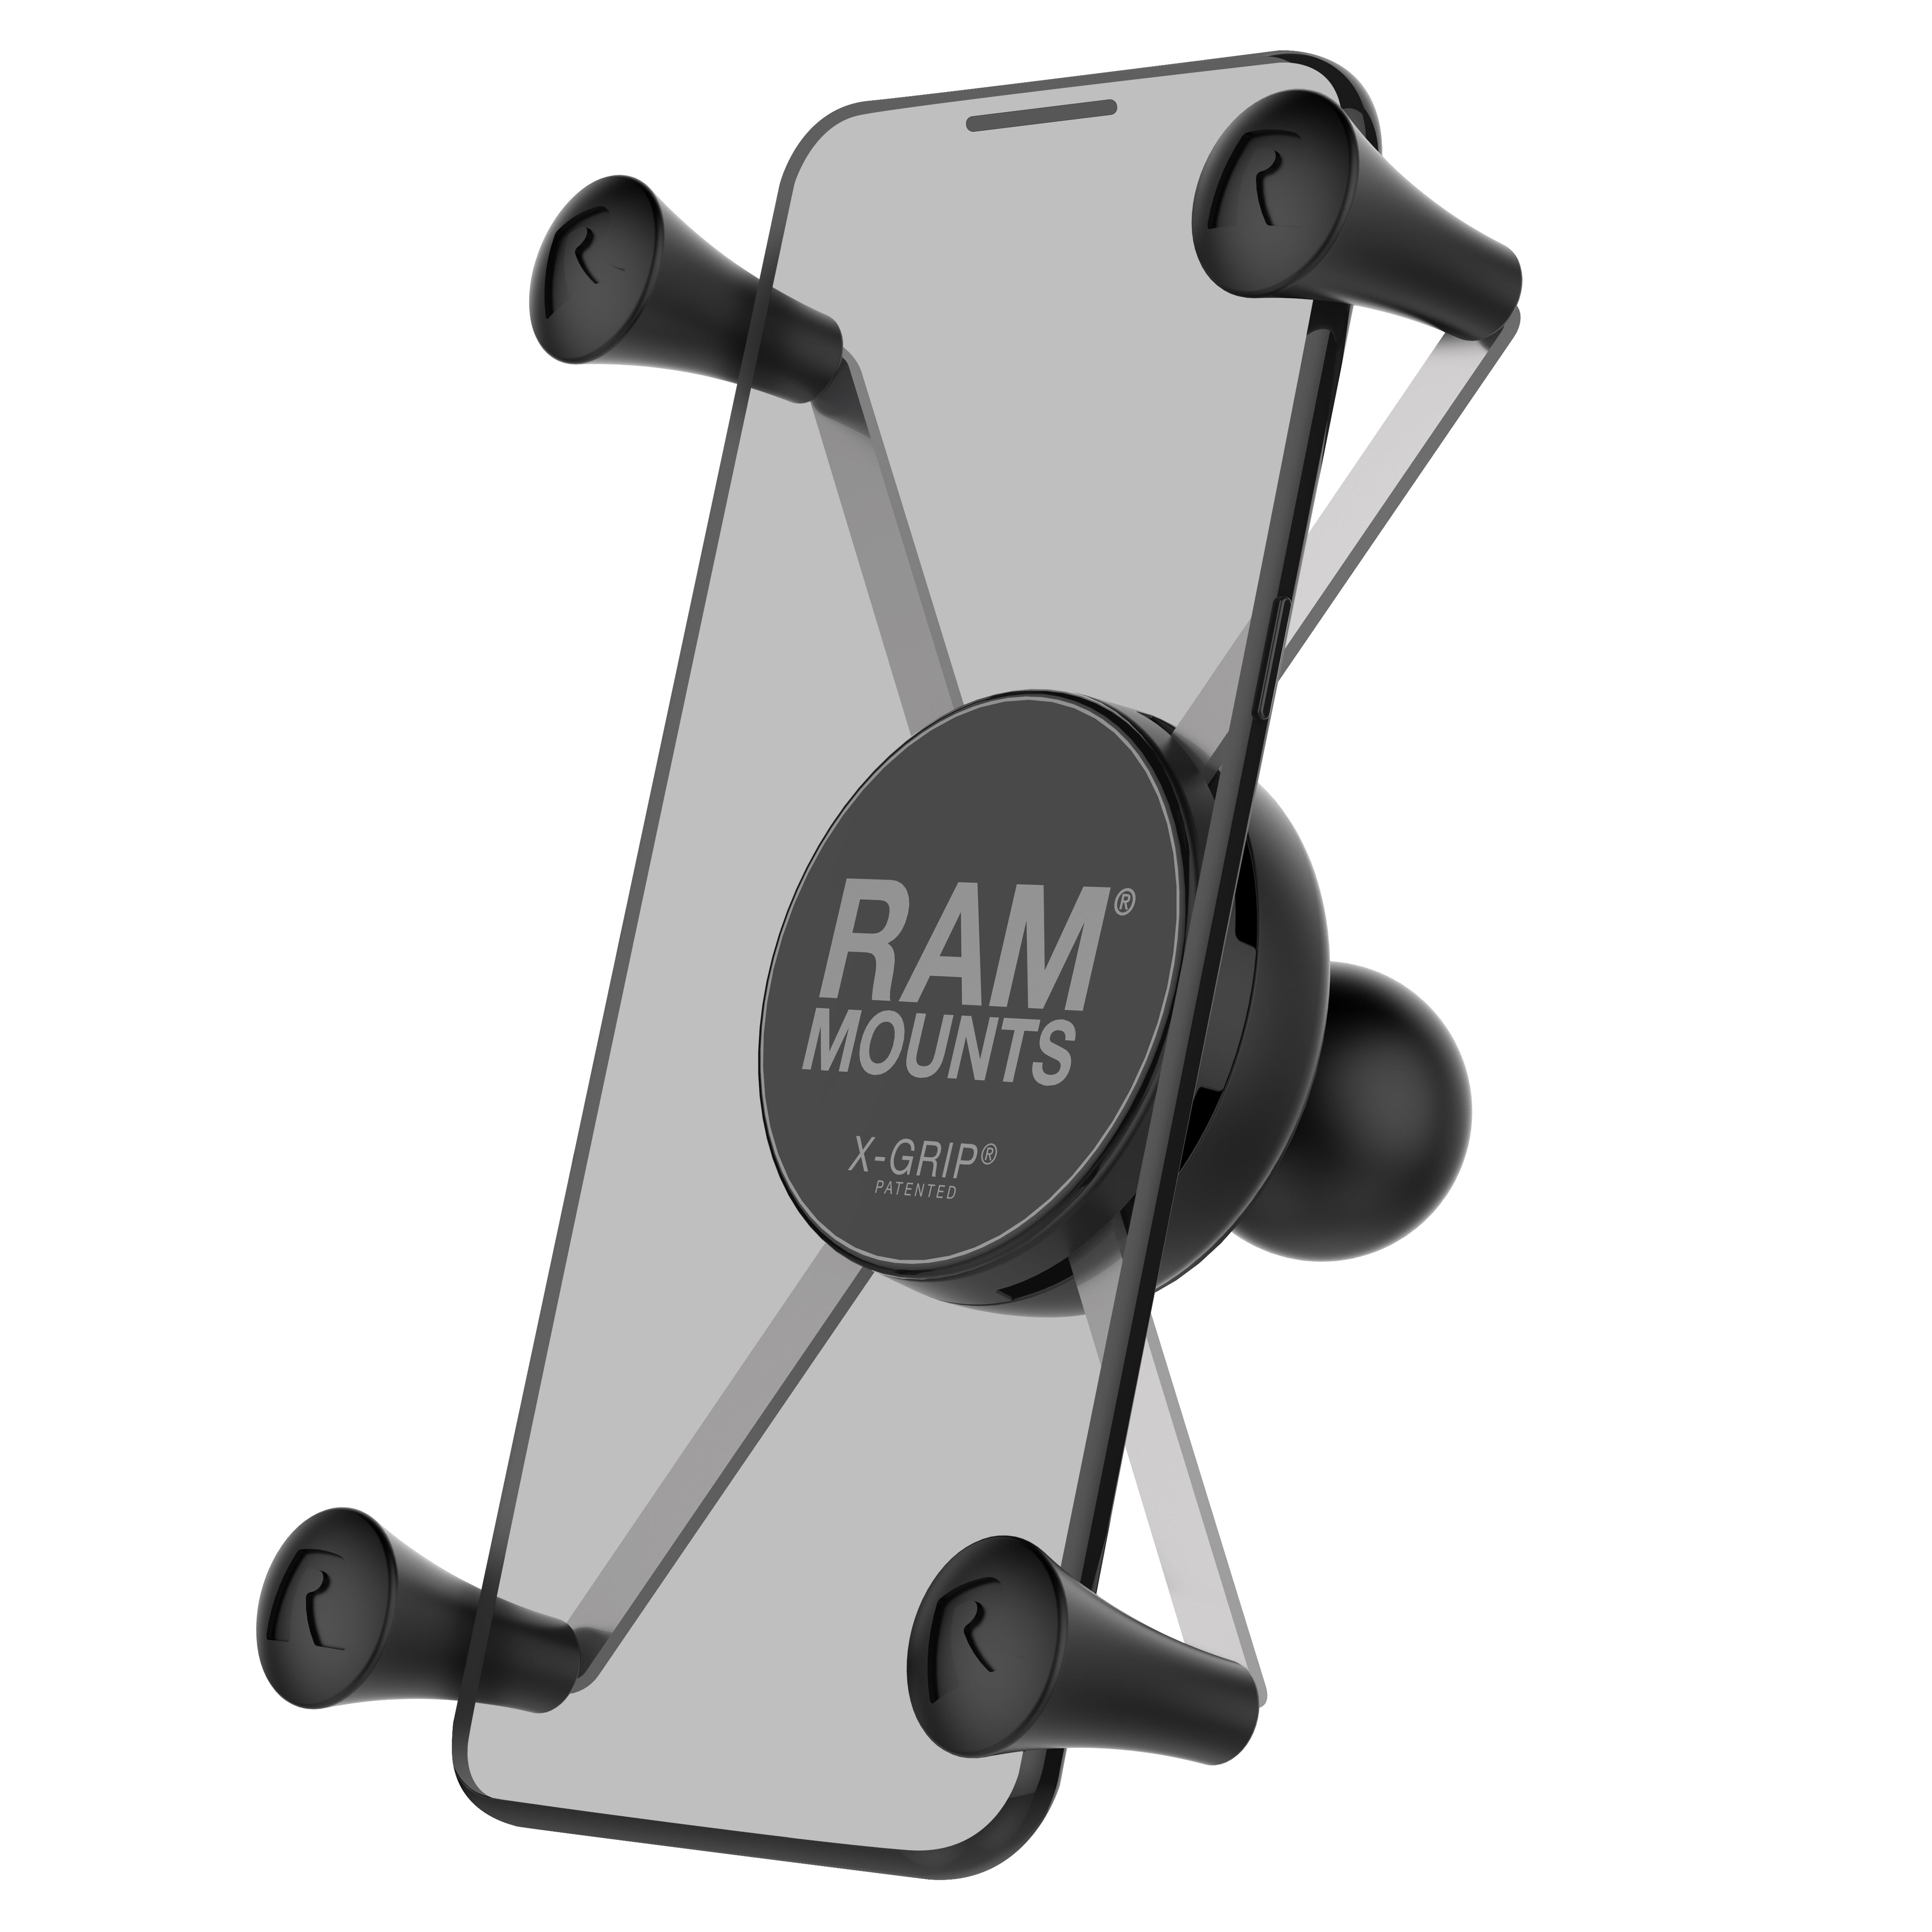 RAM Mounts X-Grip Rubber Cap 4-Pack Replacement RAP-UN-CAP-4U